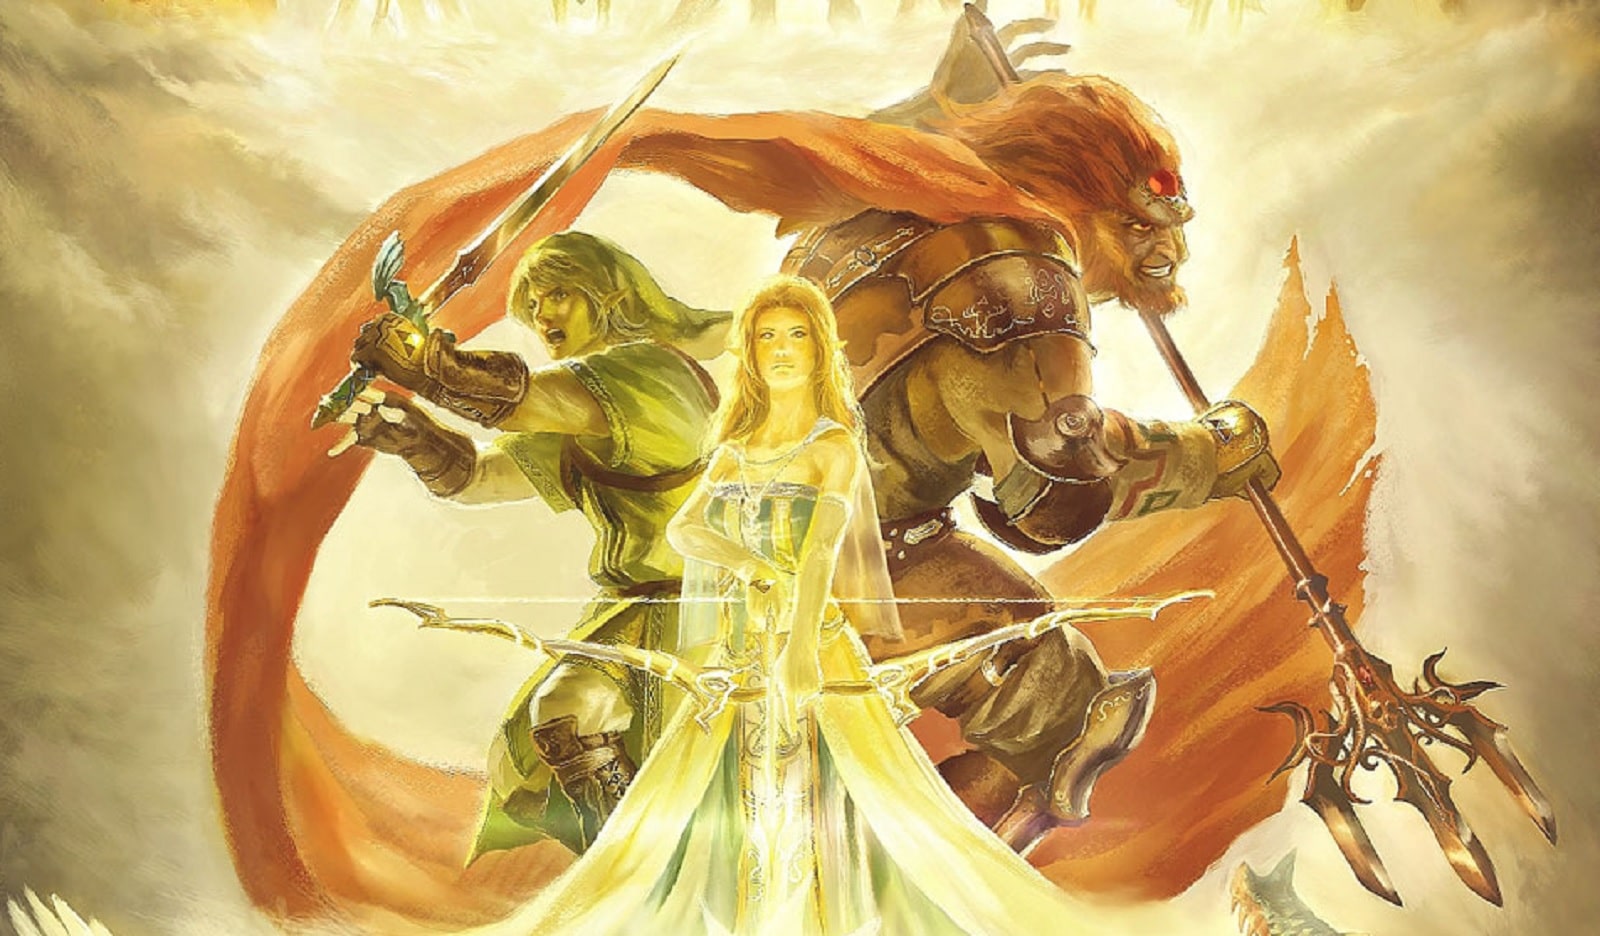 Zelda Game of Thrones Artwork by AGPlus